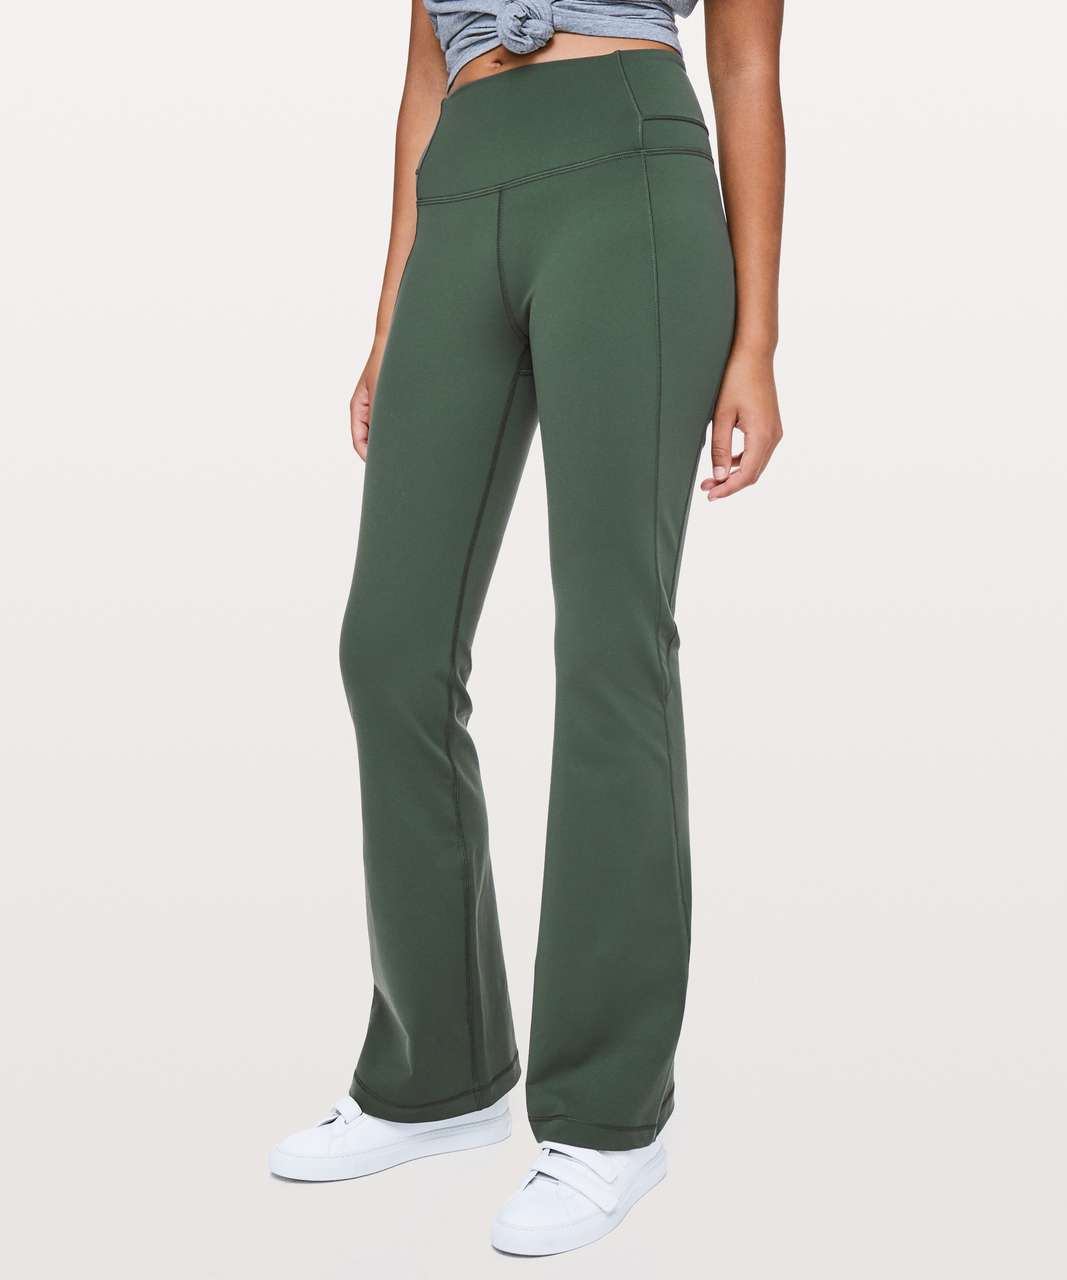 Lululemon Astro Pants Size 6 Citron Tinted Canvas Roll Down Straight Leg  Legging - Athletic apparel